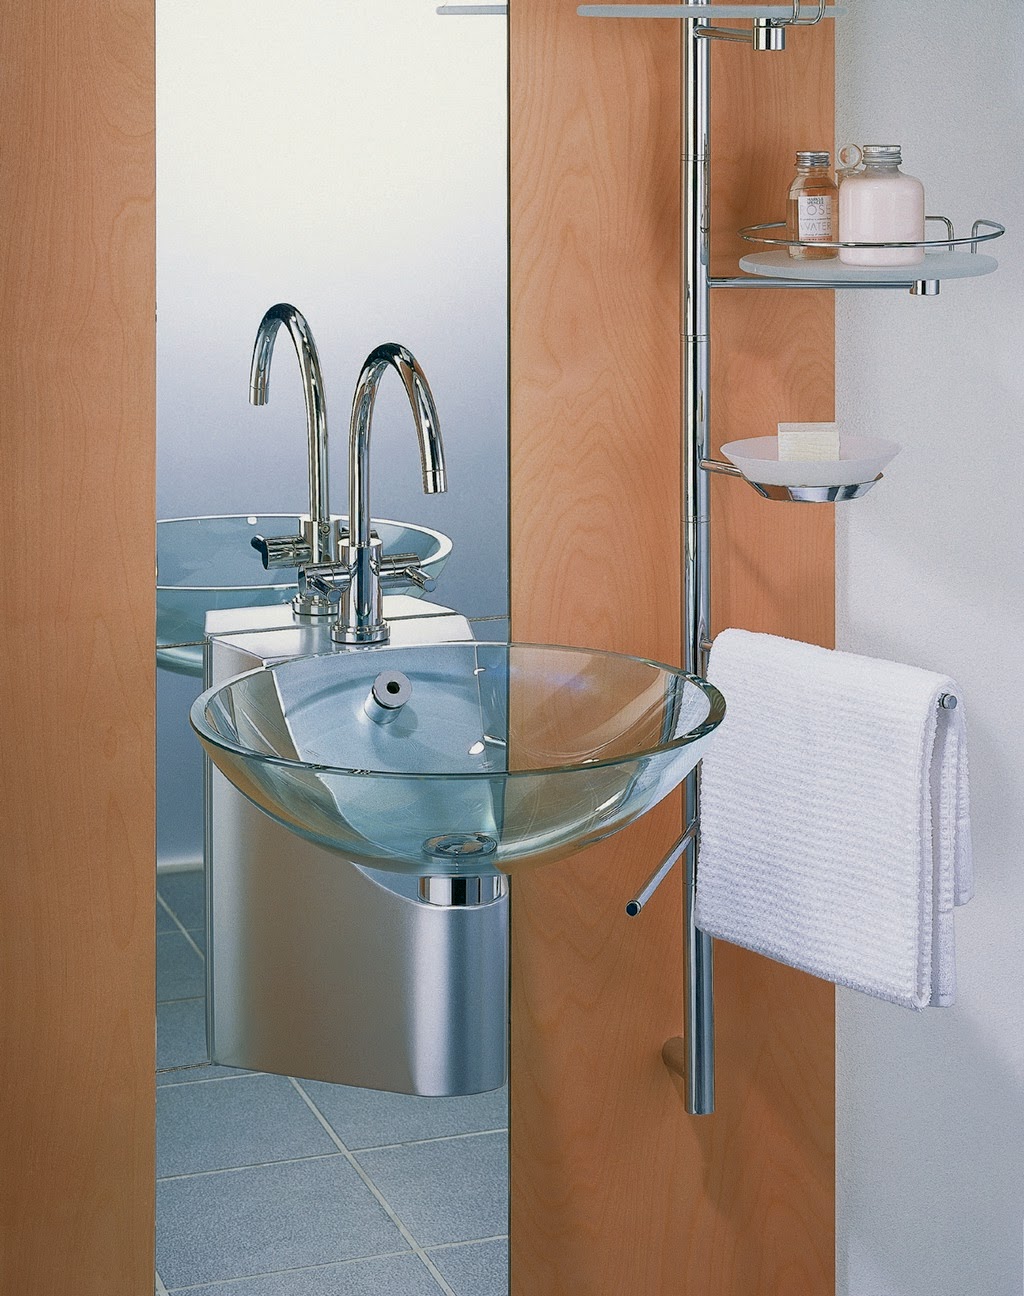 Design Bathroom Tiles Online Free Home Decorating Ideasbathroom Interior Design